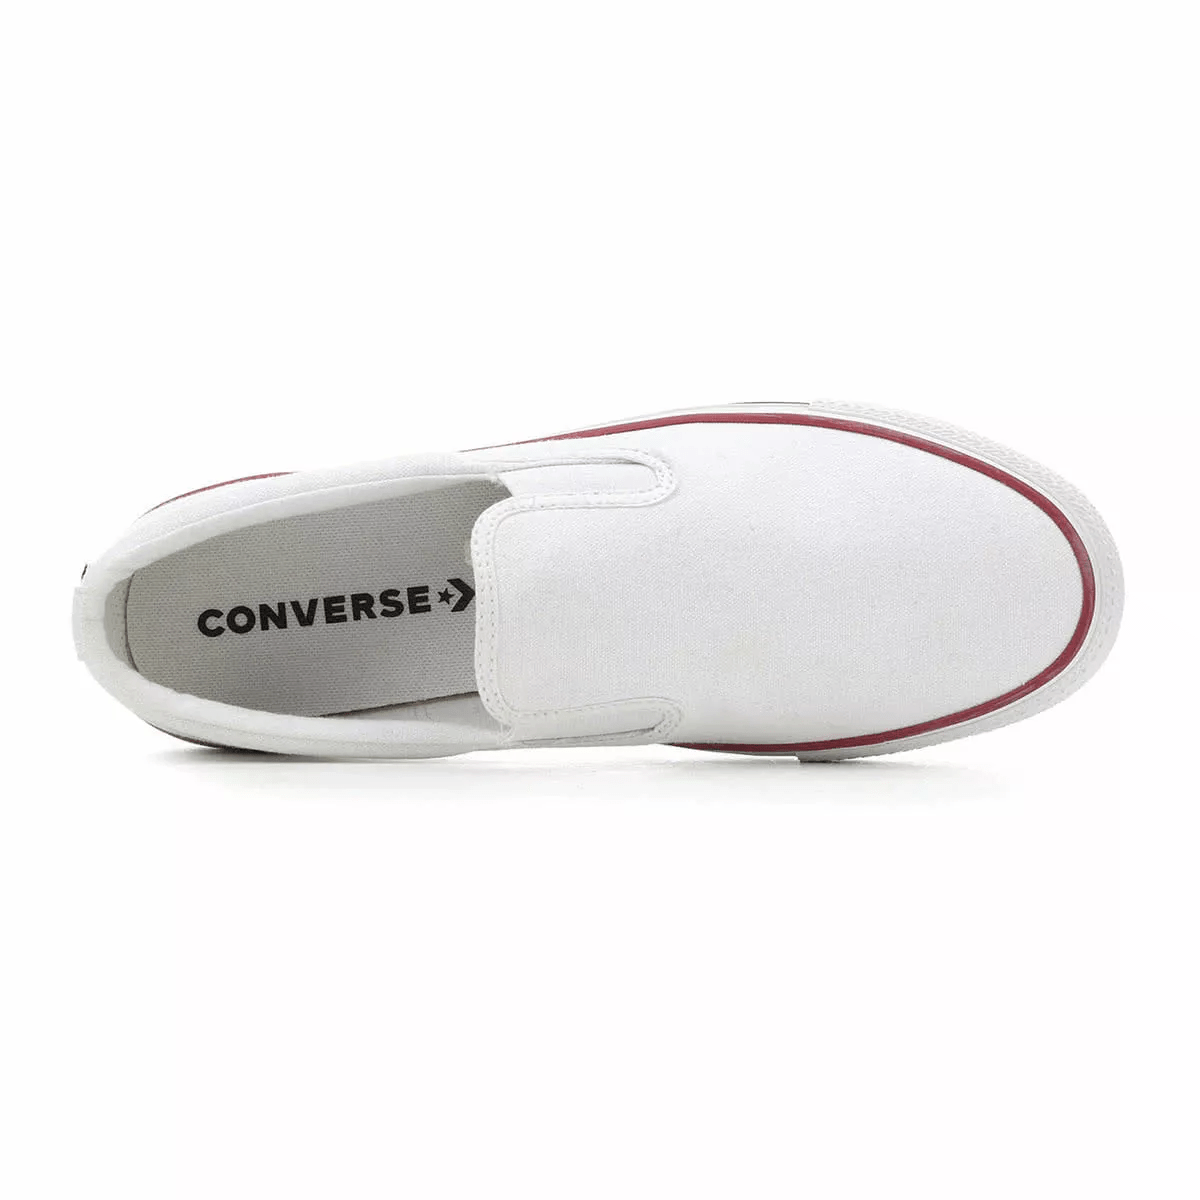 Converse FOOTWEAR Converse Chuck Taylor Double Gore Slip On - Men's